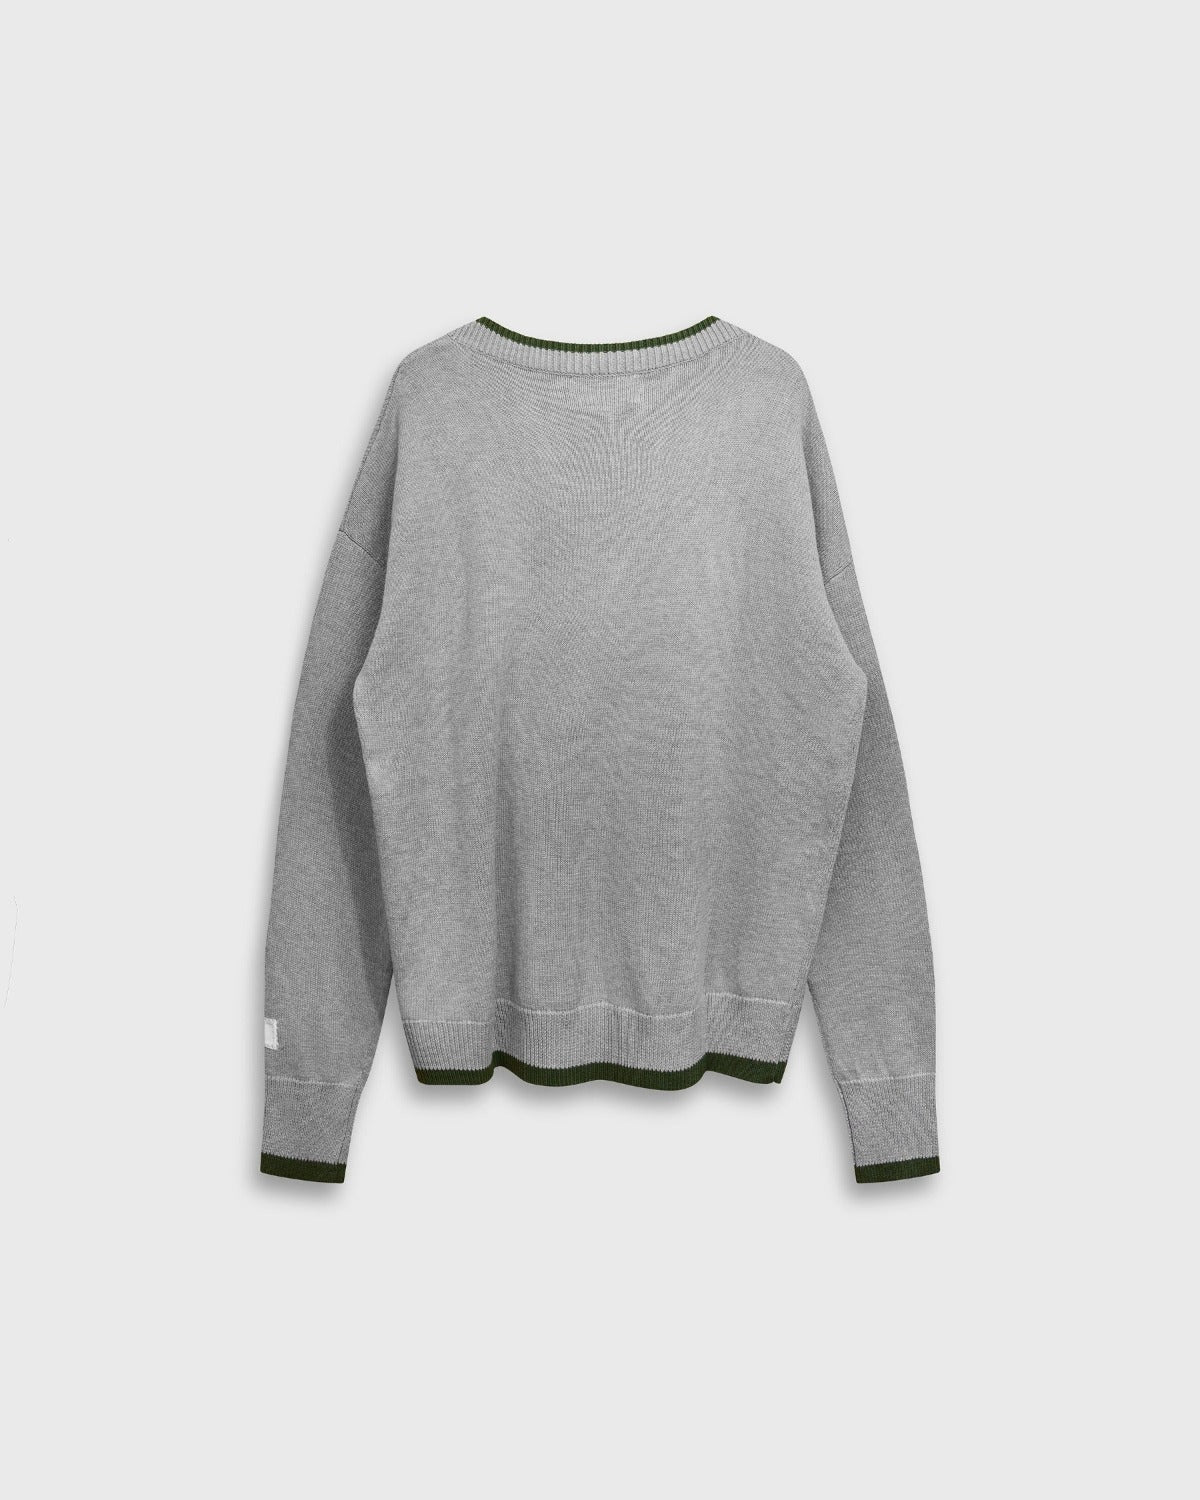 Men's grey long sleeve Kosher K v-neck 100% cotton sweater by Krost NY